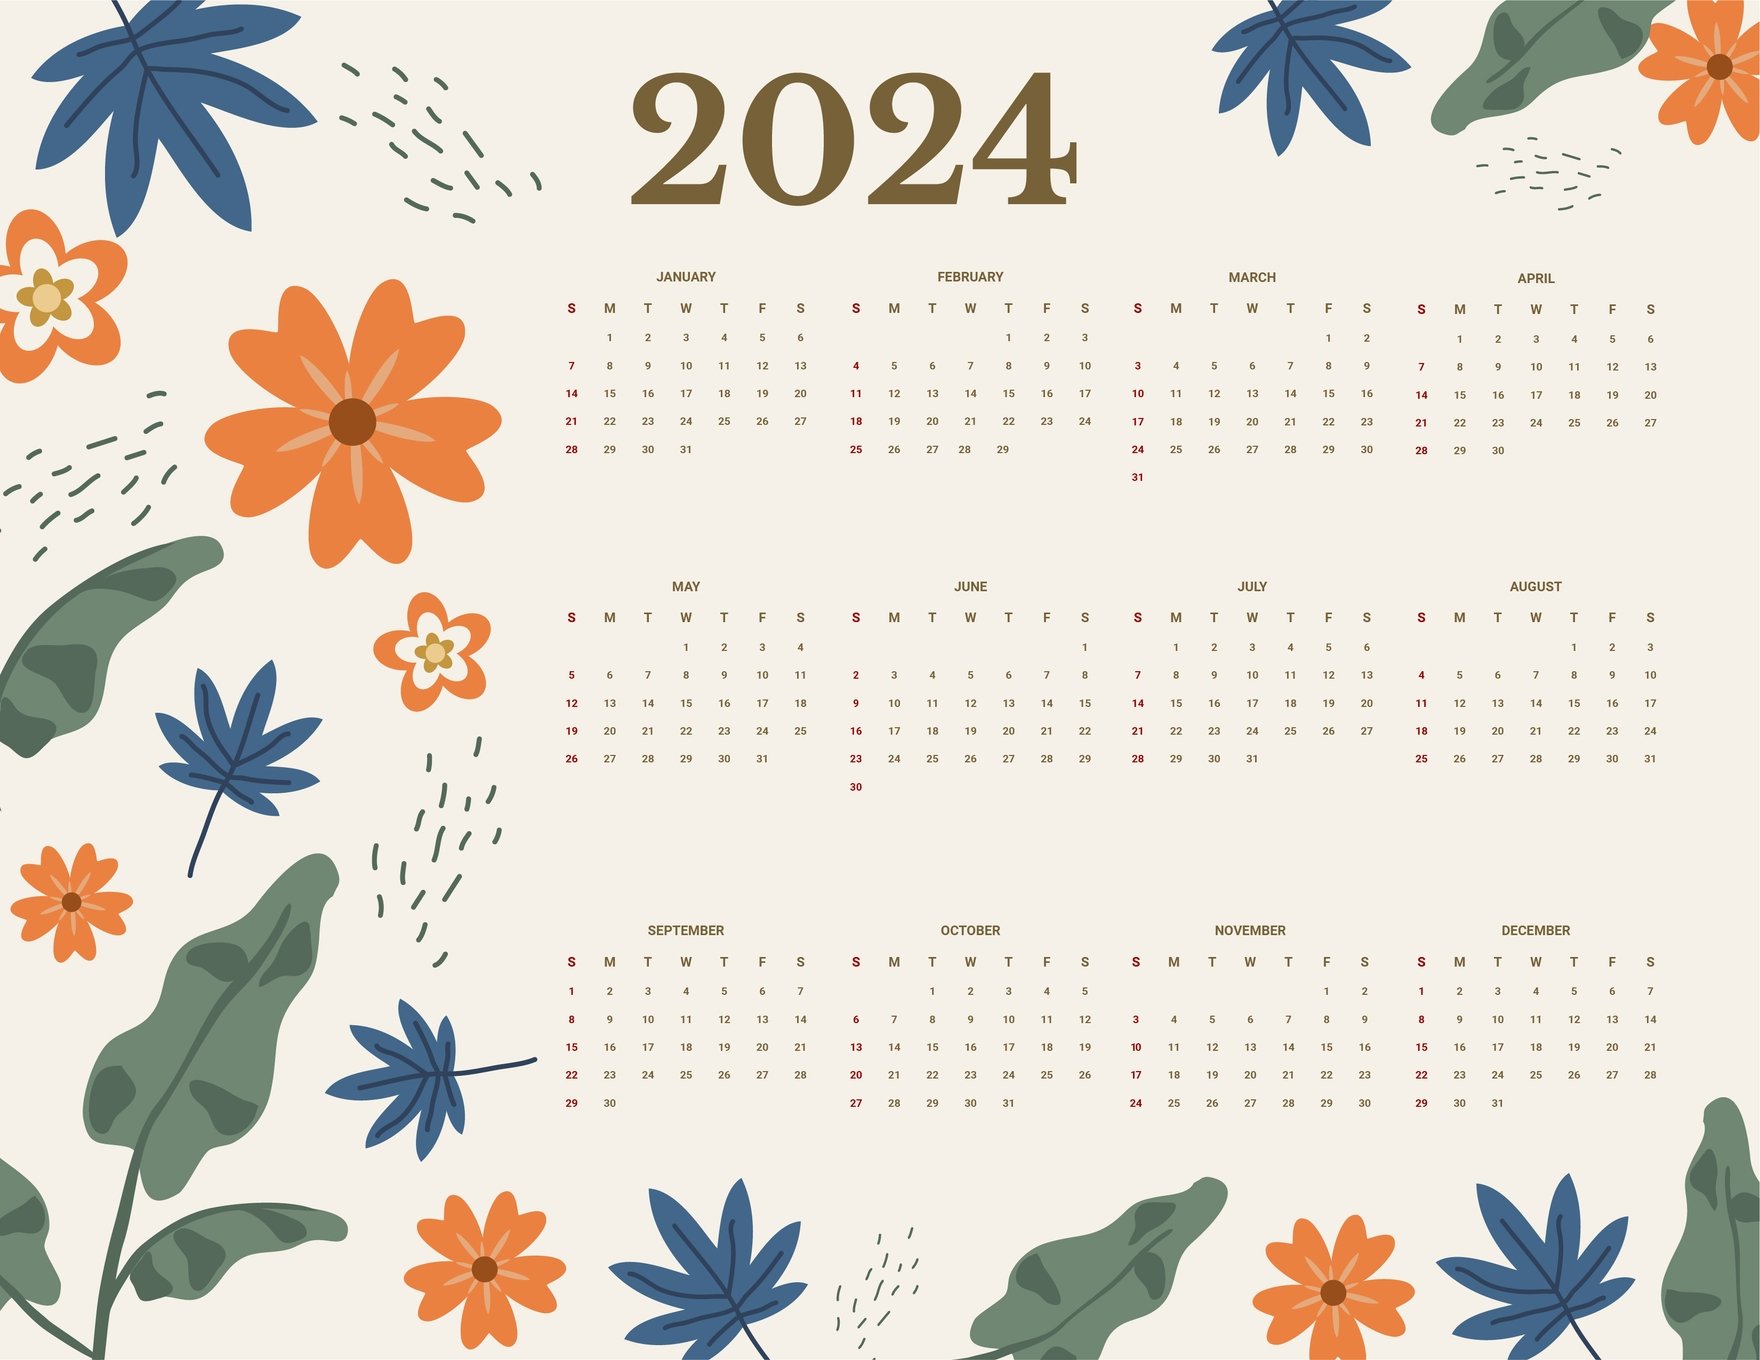 2024 Calendar Image Download Lian Sheena